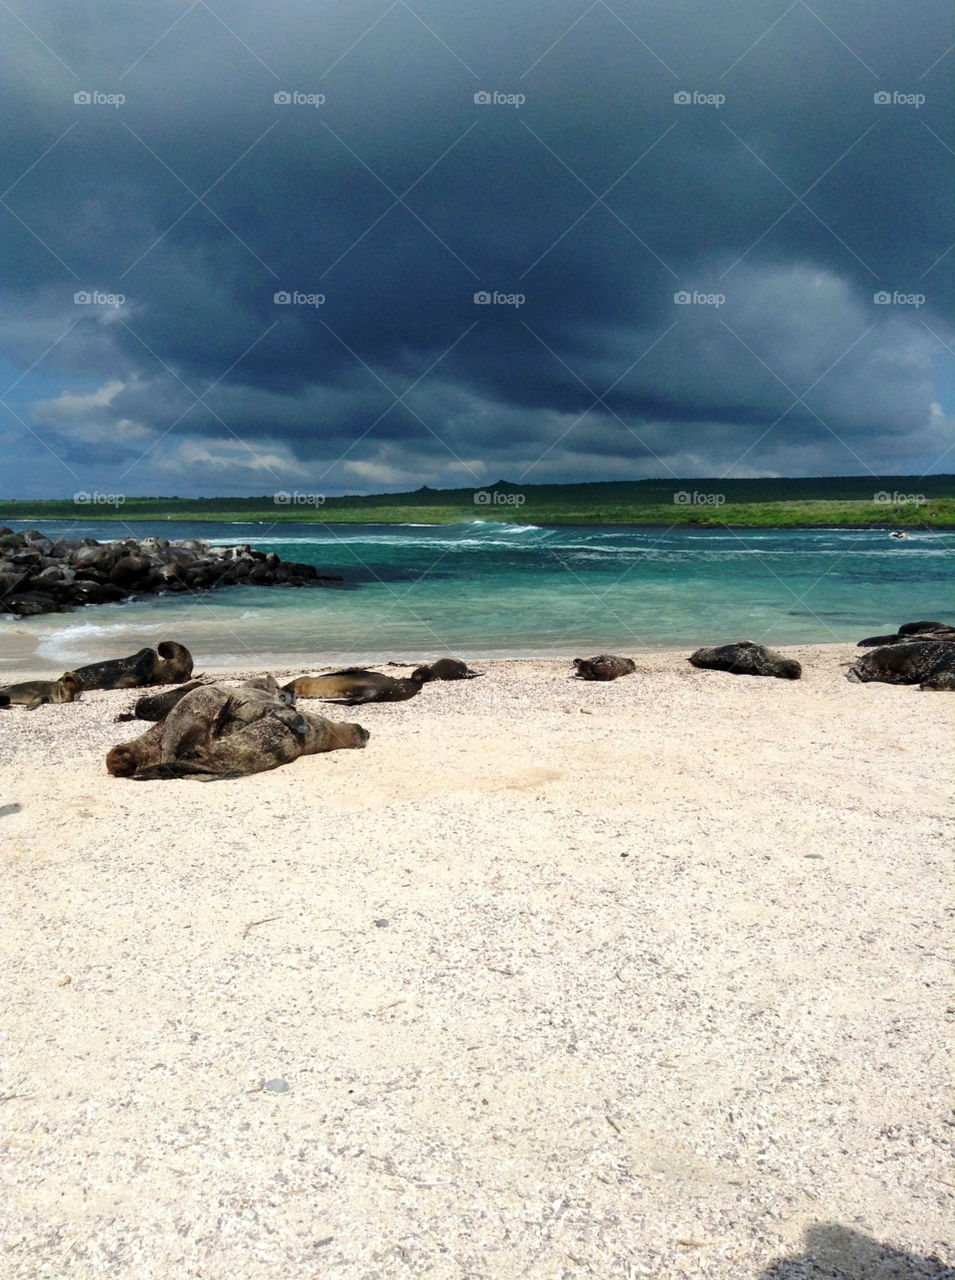 Sea lions on Galapagos beach